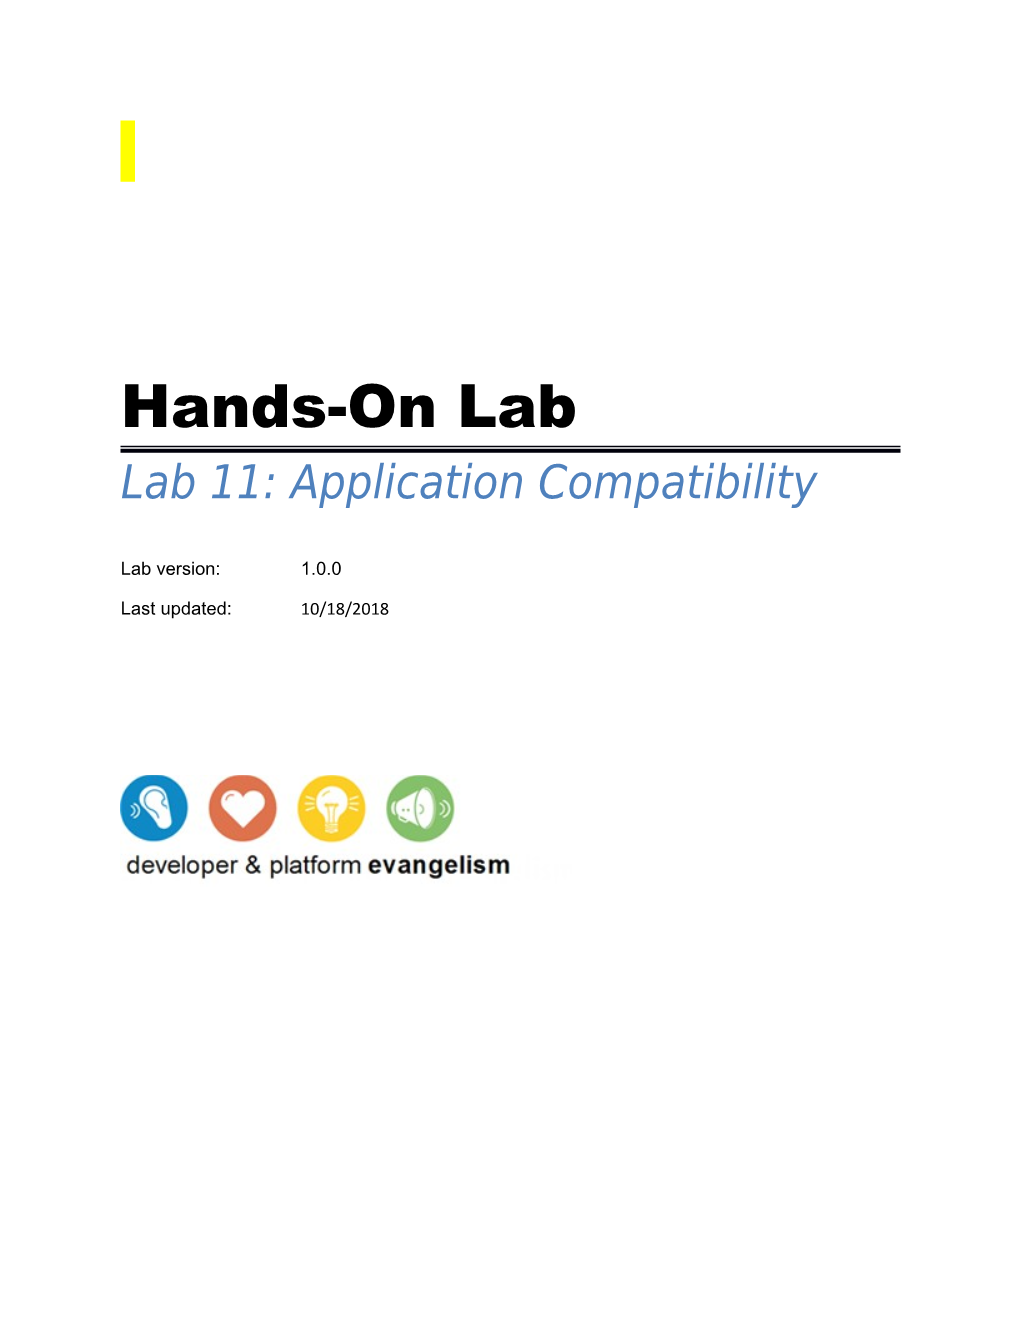 Application Compatibility Lab